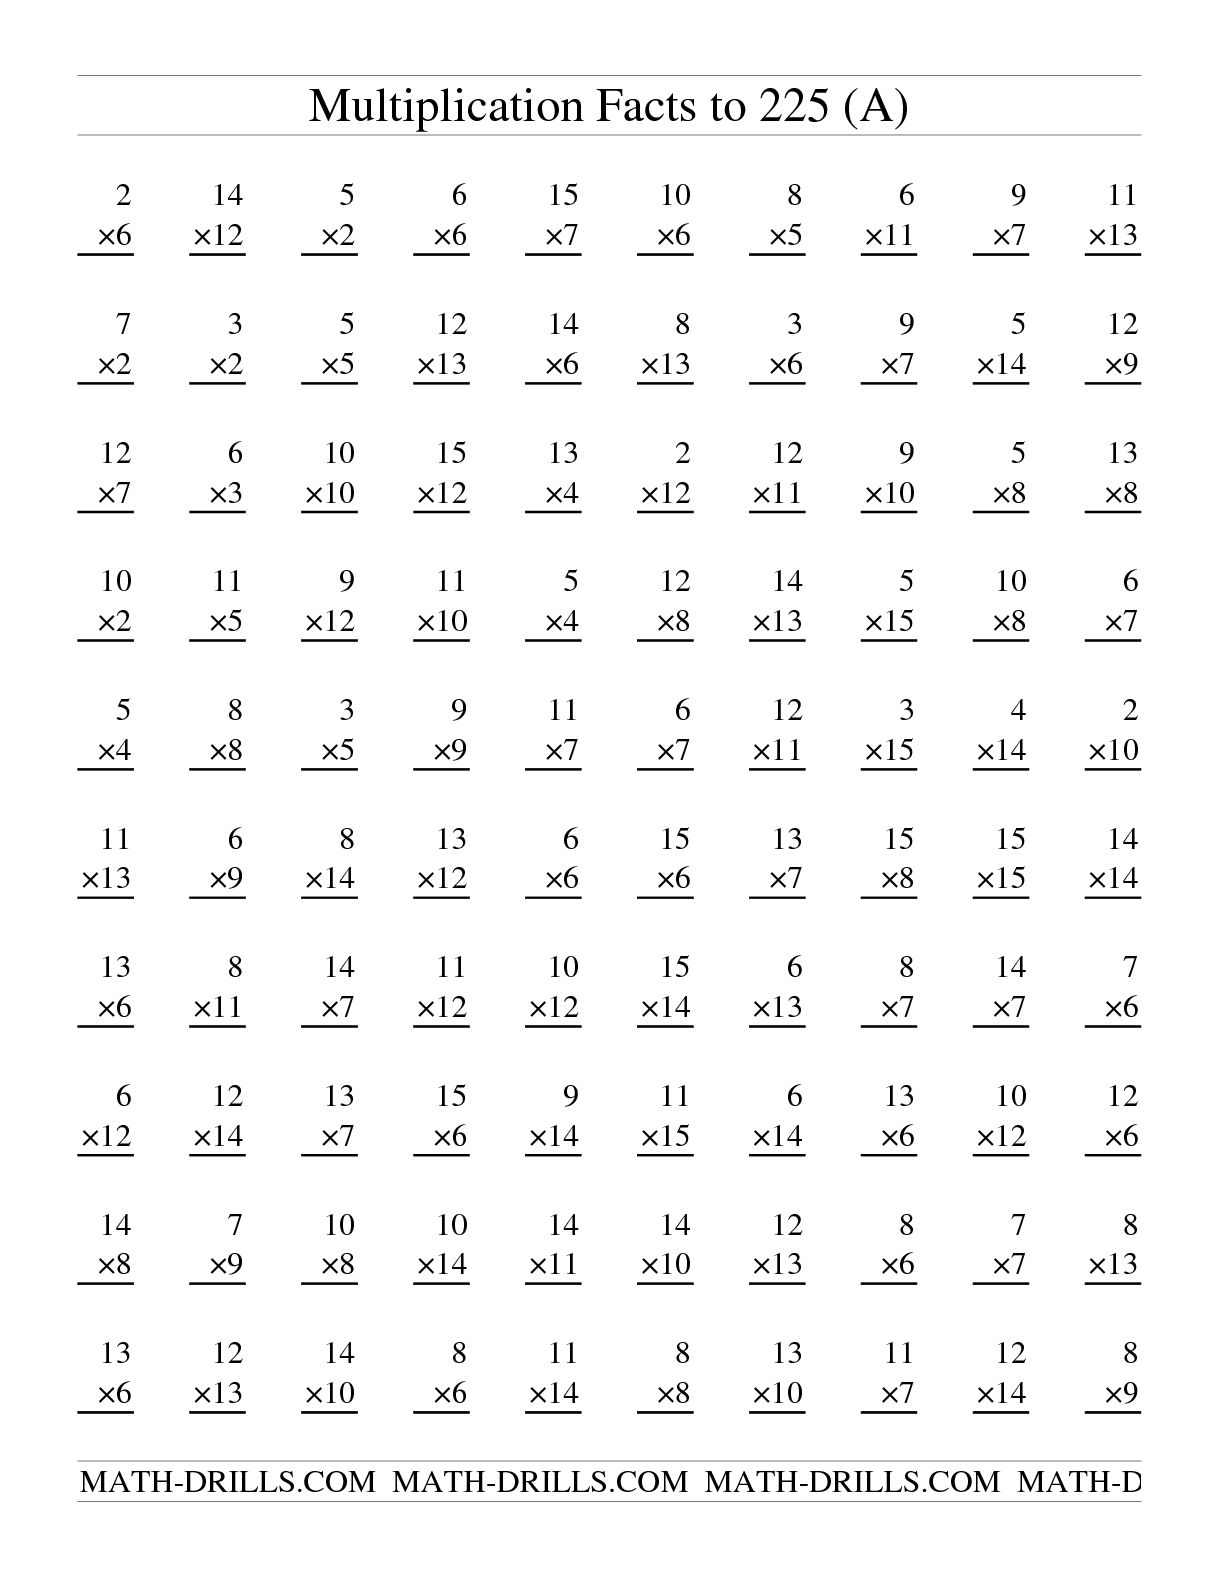 6-best-images-of-math-drills-multiplication-worksheets-printable-math